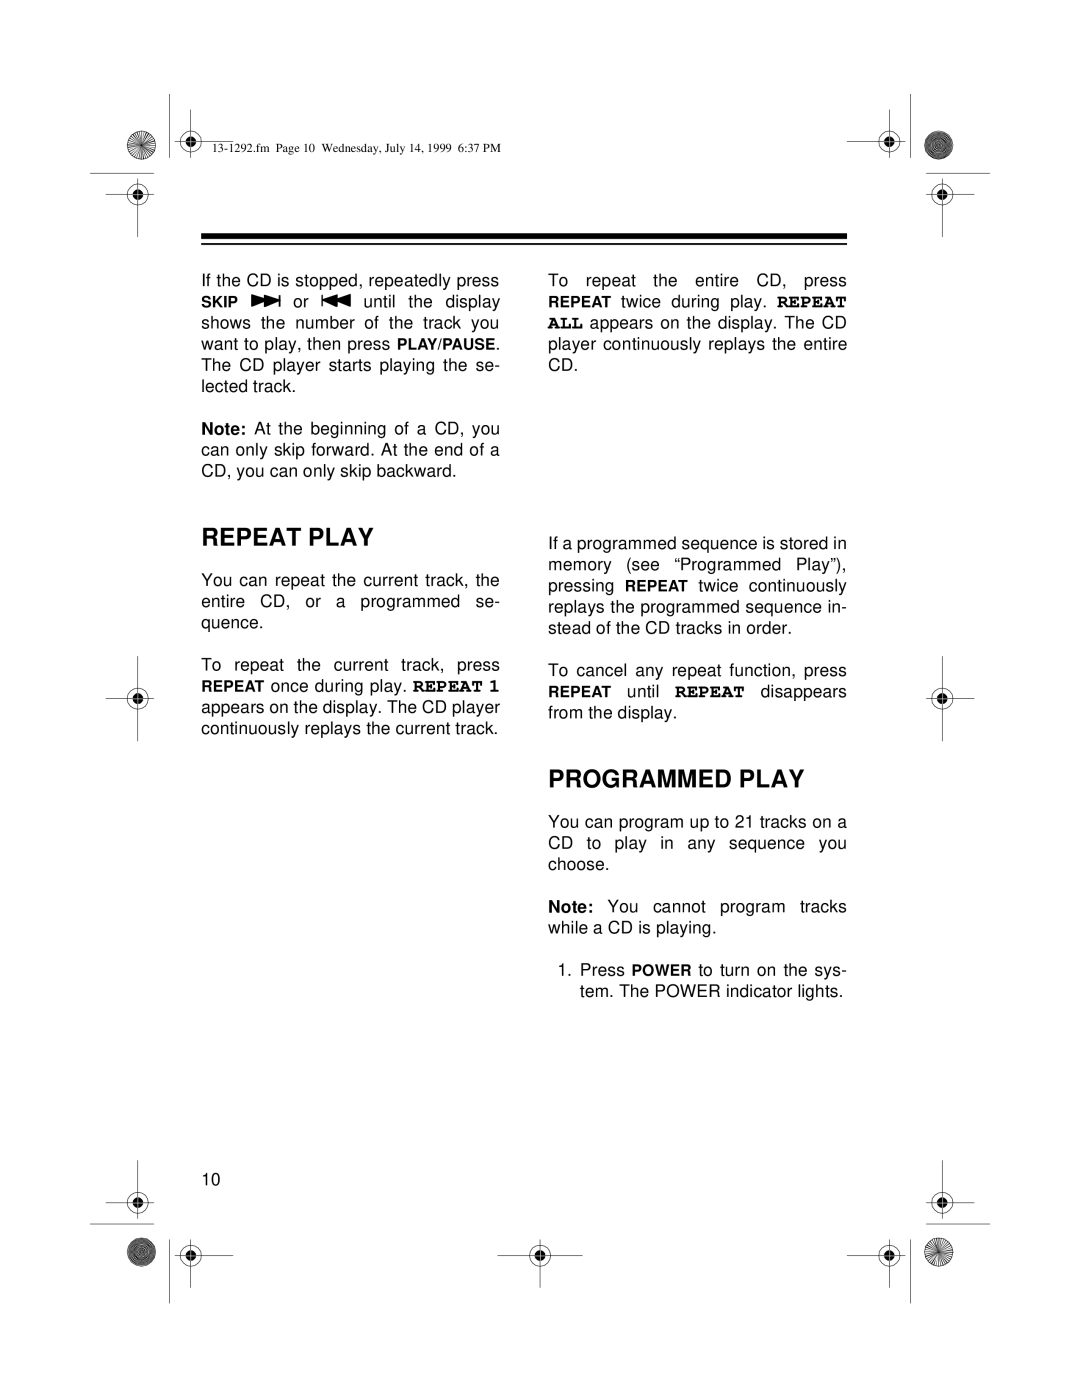 Optimus 739 owner manual Repeat Play, Programmed Play 